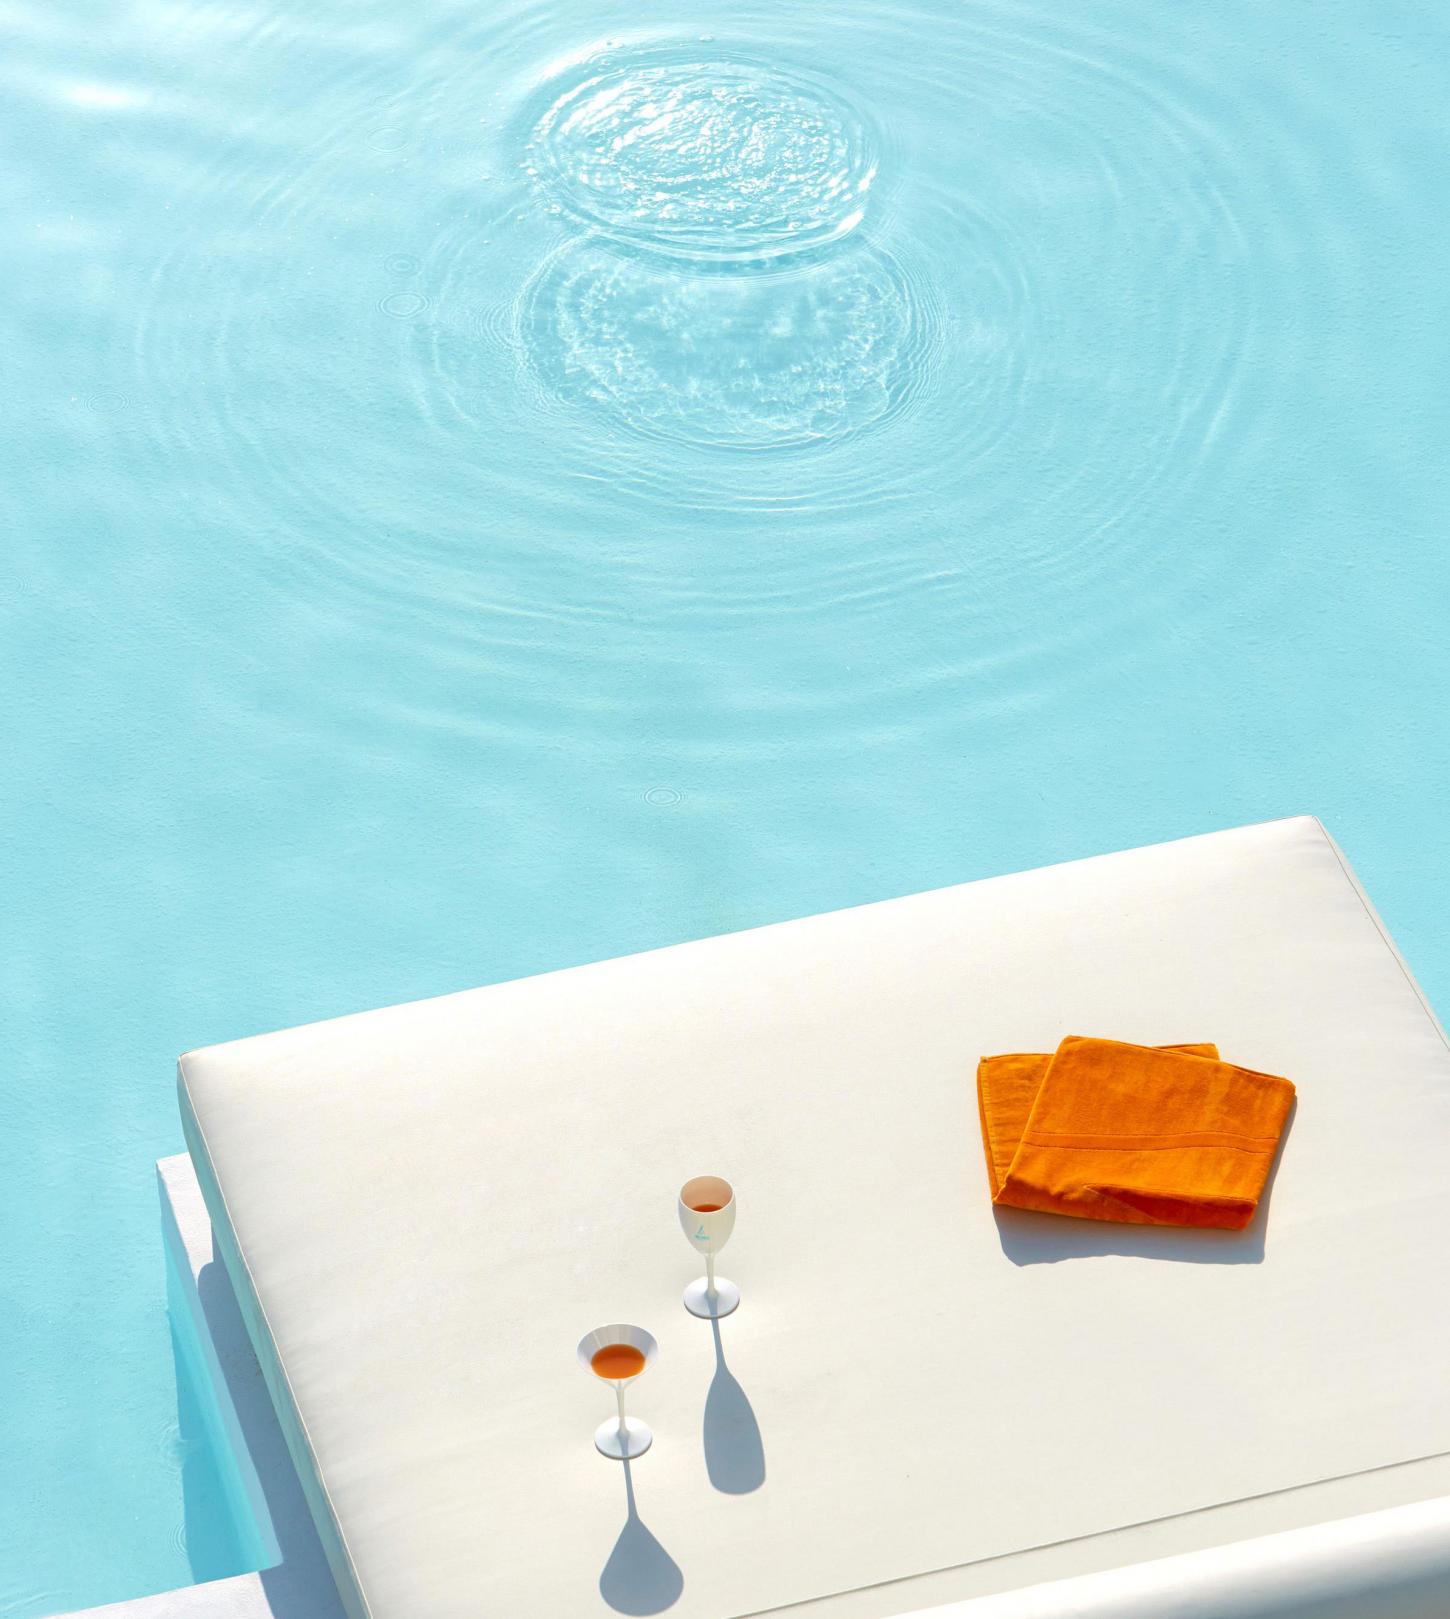 Nikki Beach Porto Heli, private pool with cocktails and orange towel